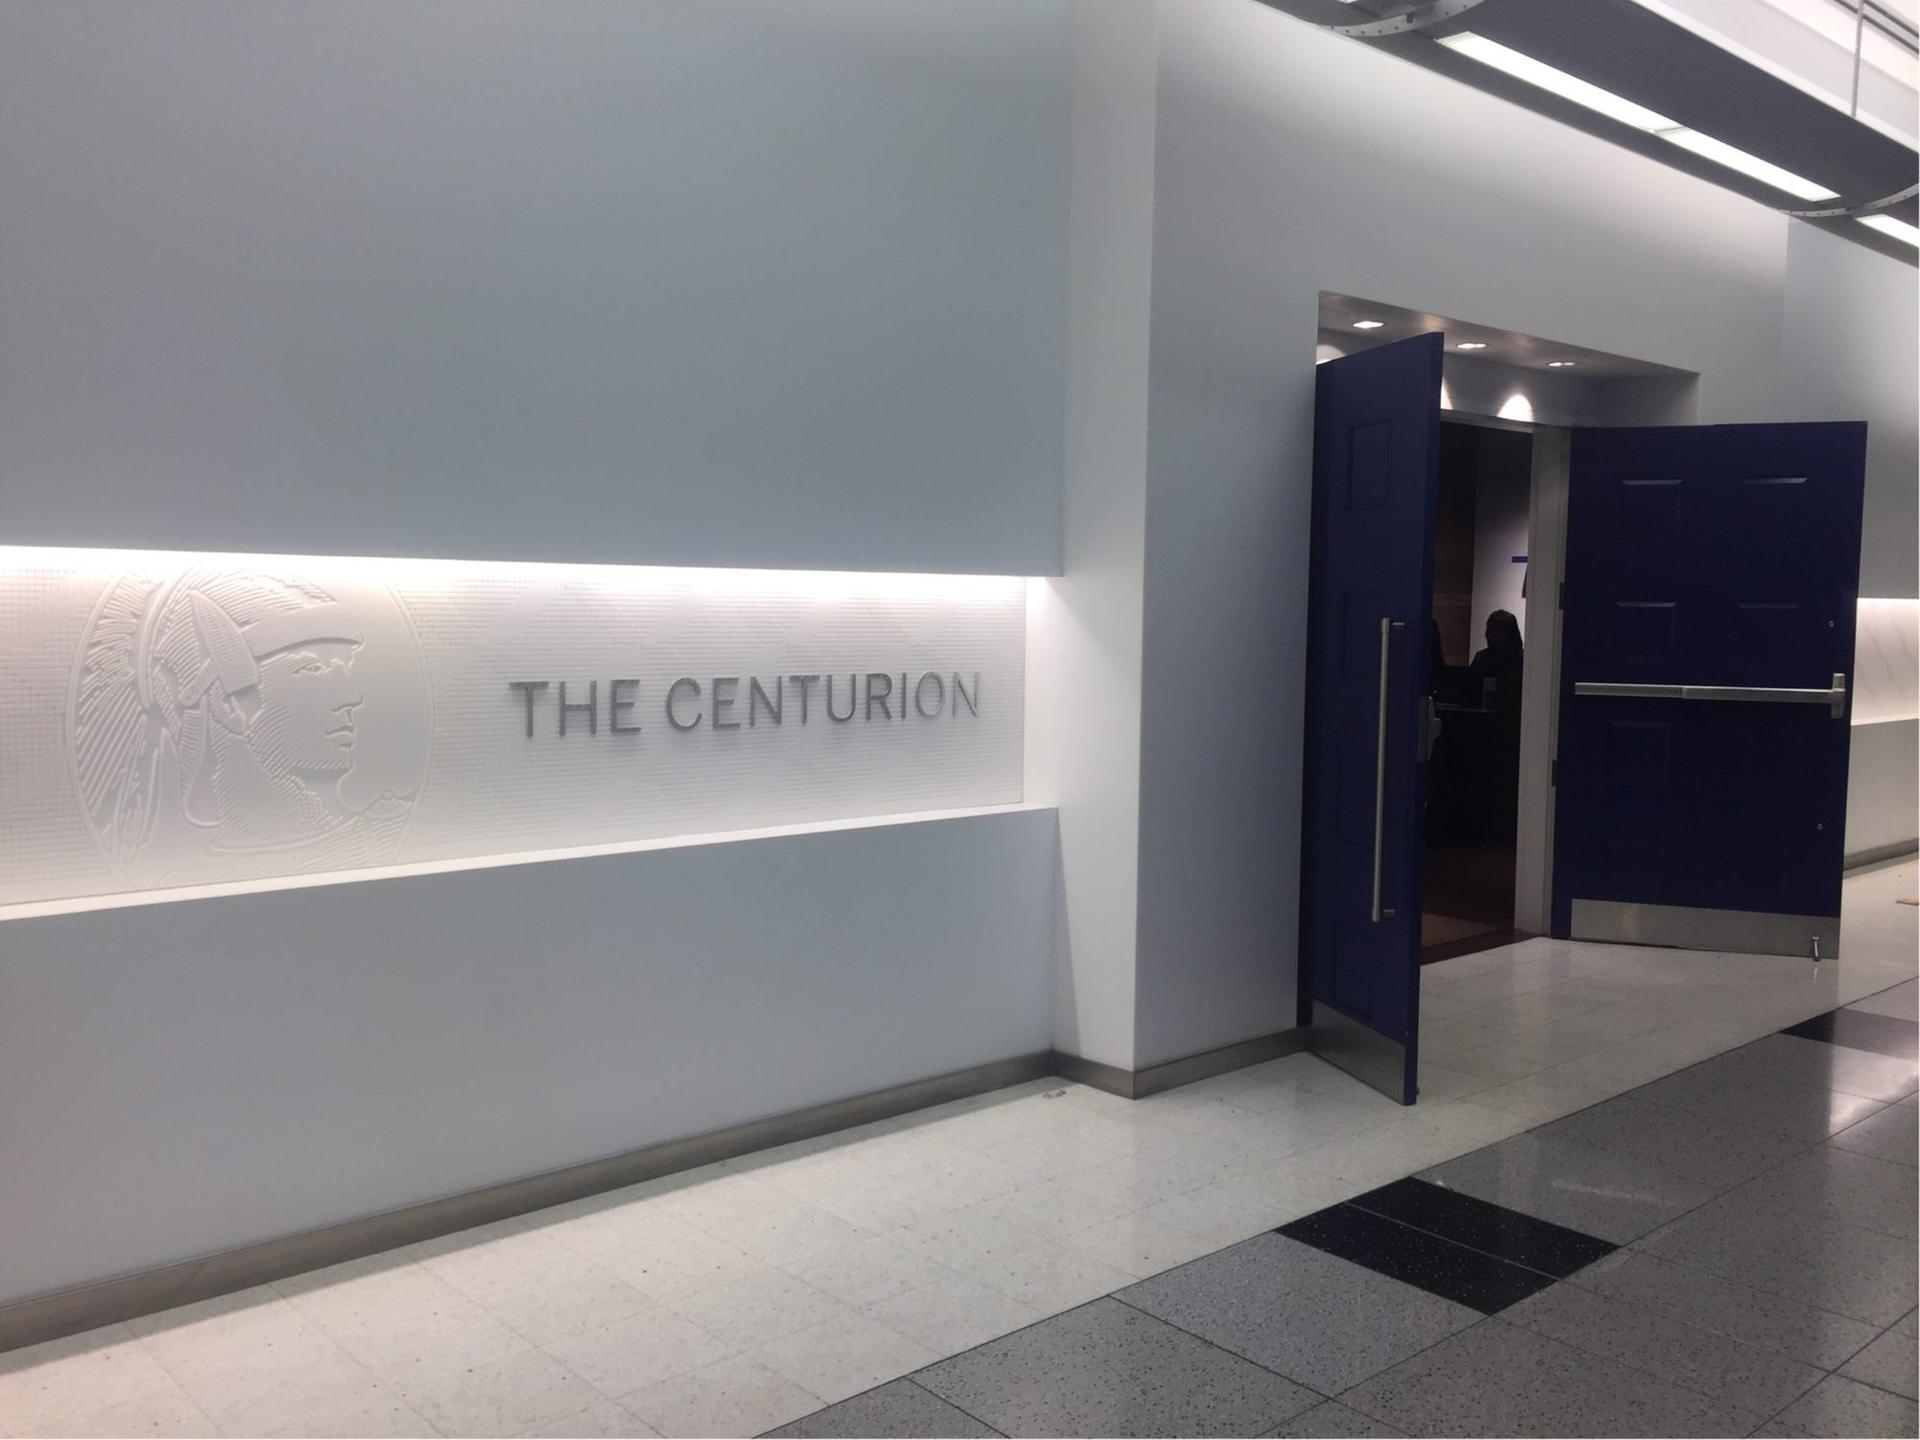 The Centurion Lounge image 72 of 100